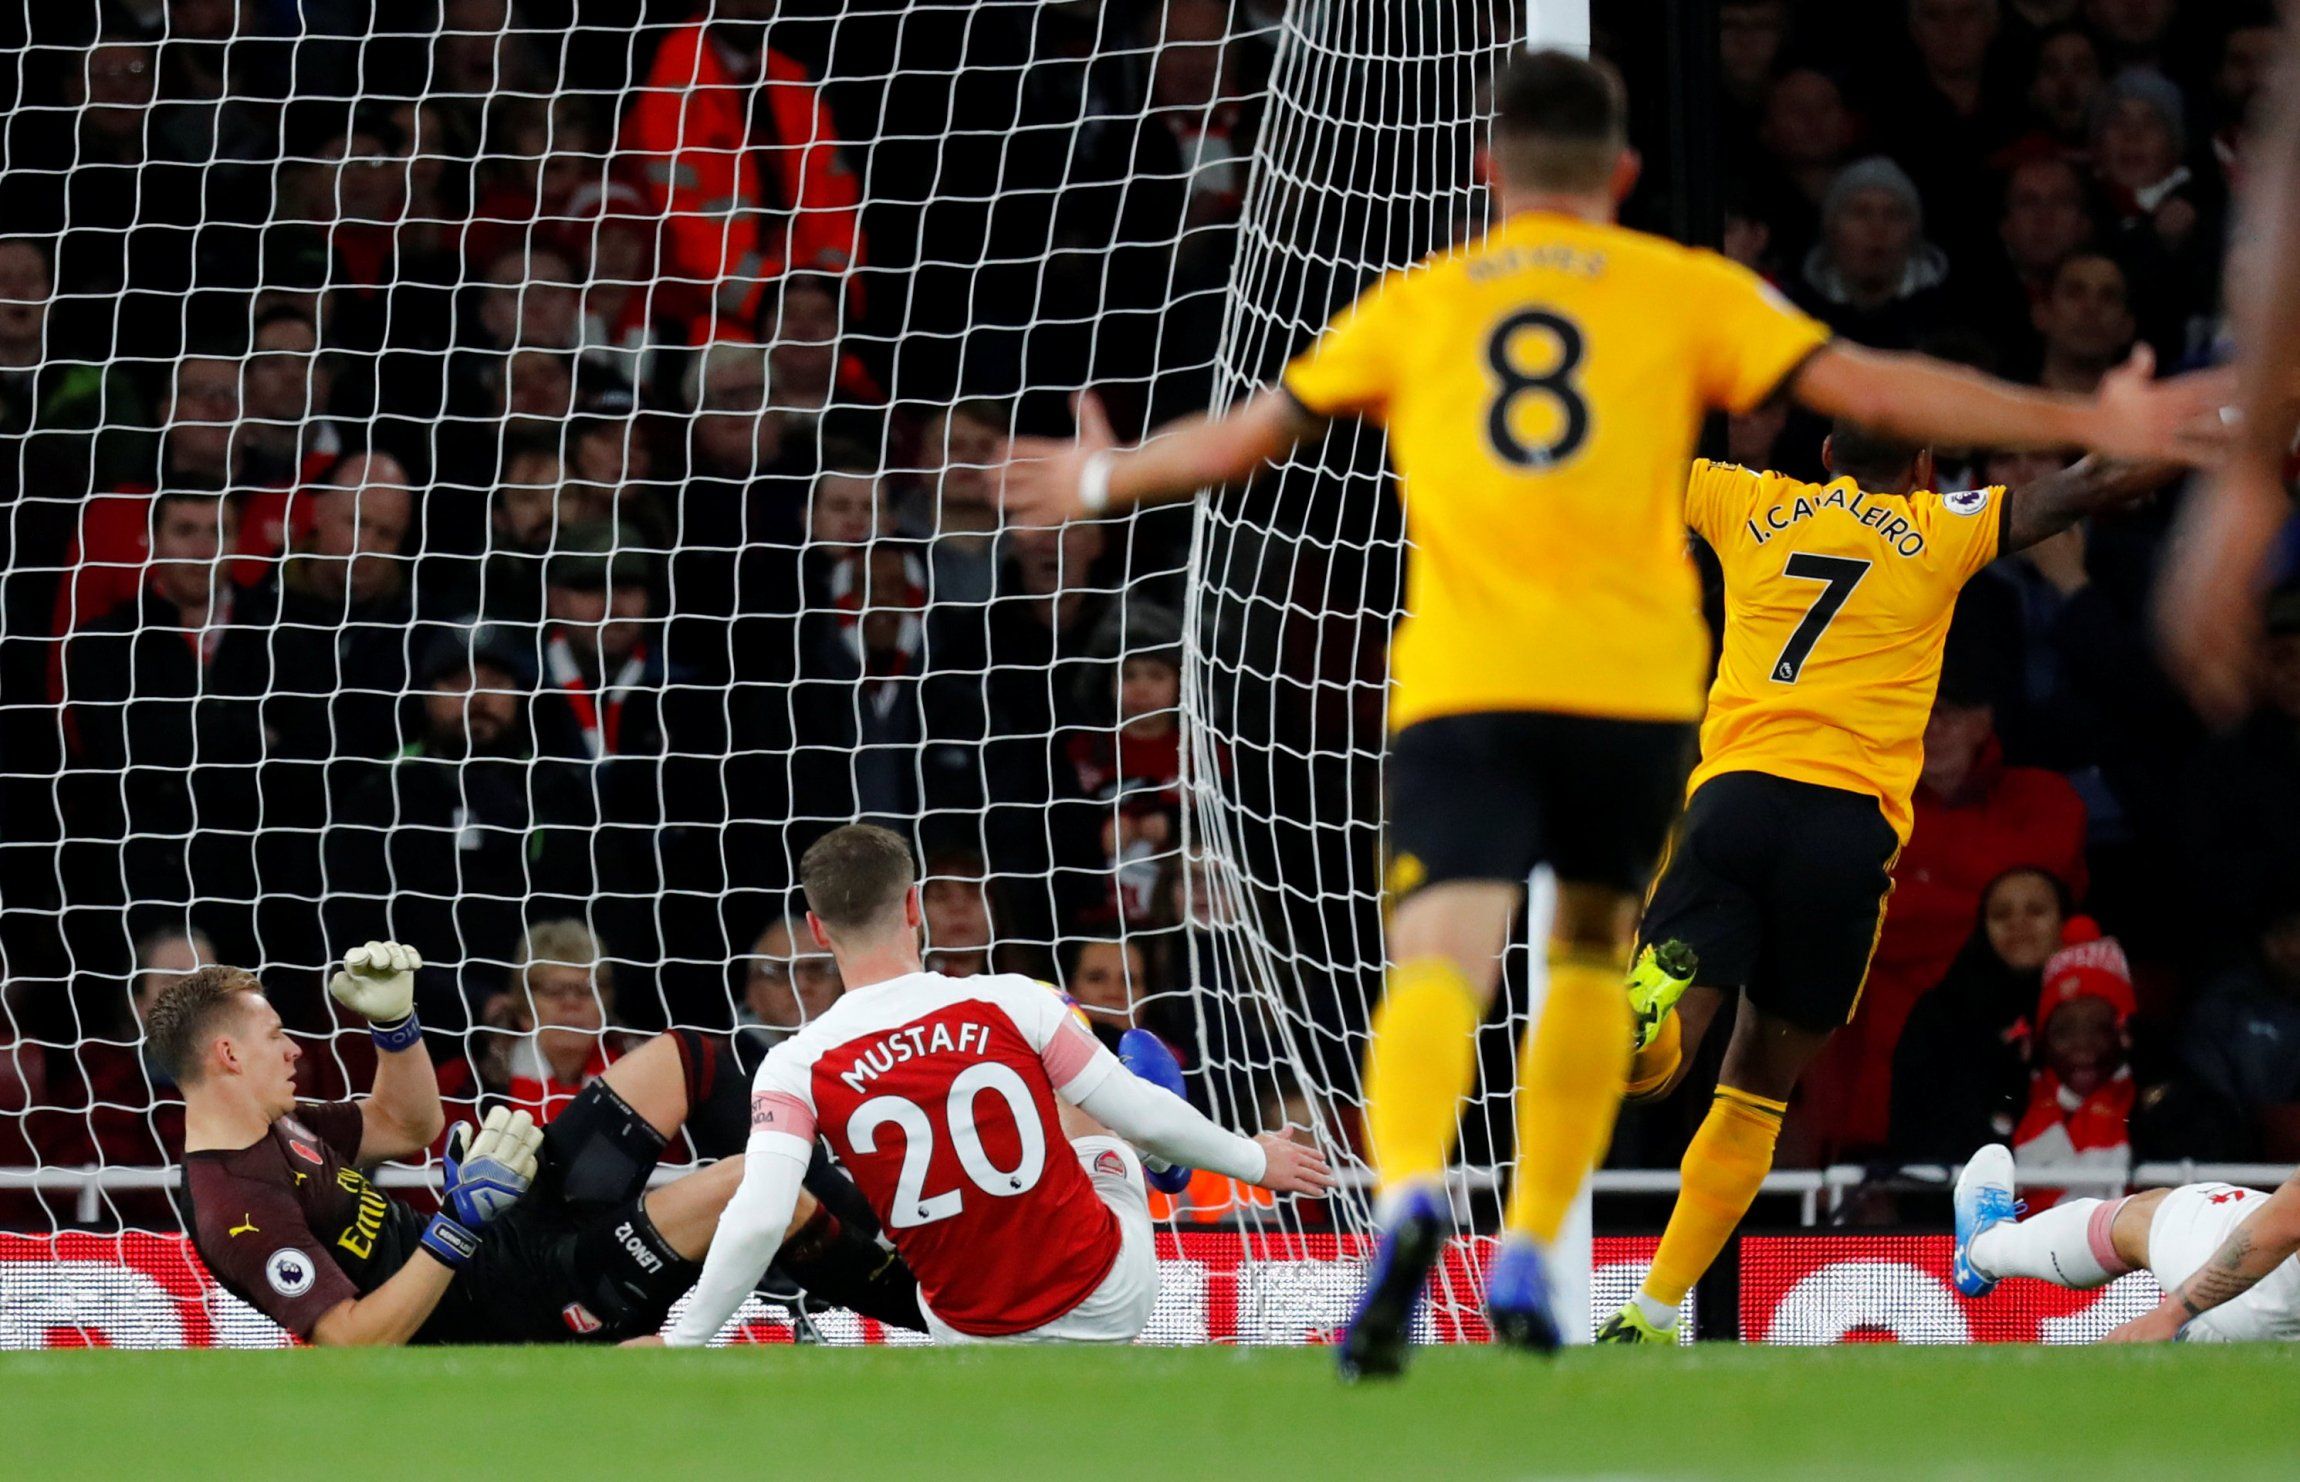 Wolverhampton Wanderers' Ivan Cavaleiro celebrates after scoring their first goal v Arsenal